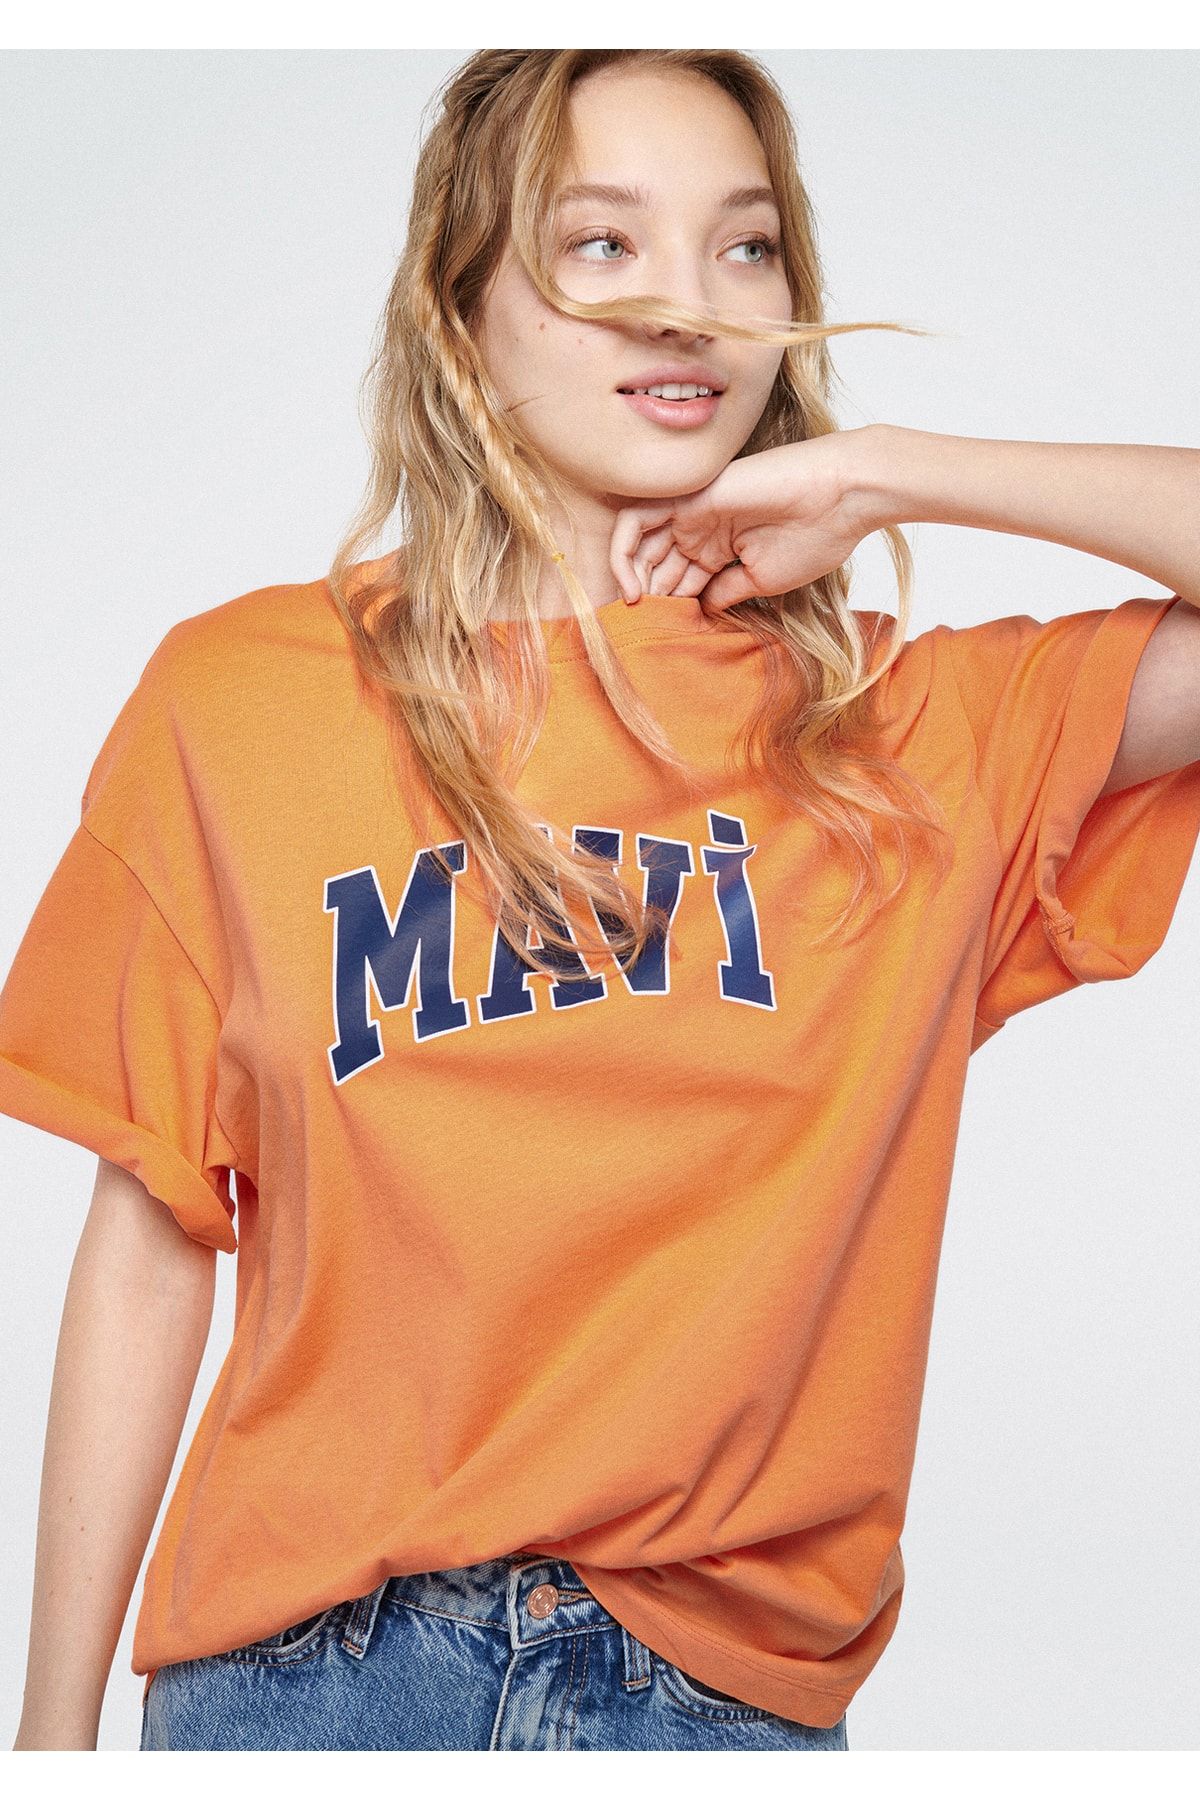 Mavi تی شرت چاپ شده با لوگو نارنجی سایز بزرگ / برش عریض 1600843-71407